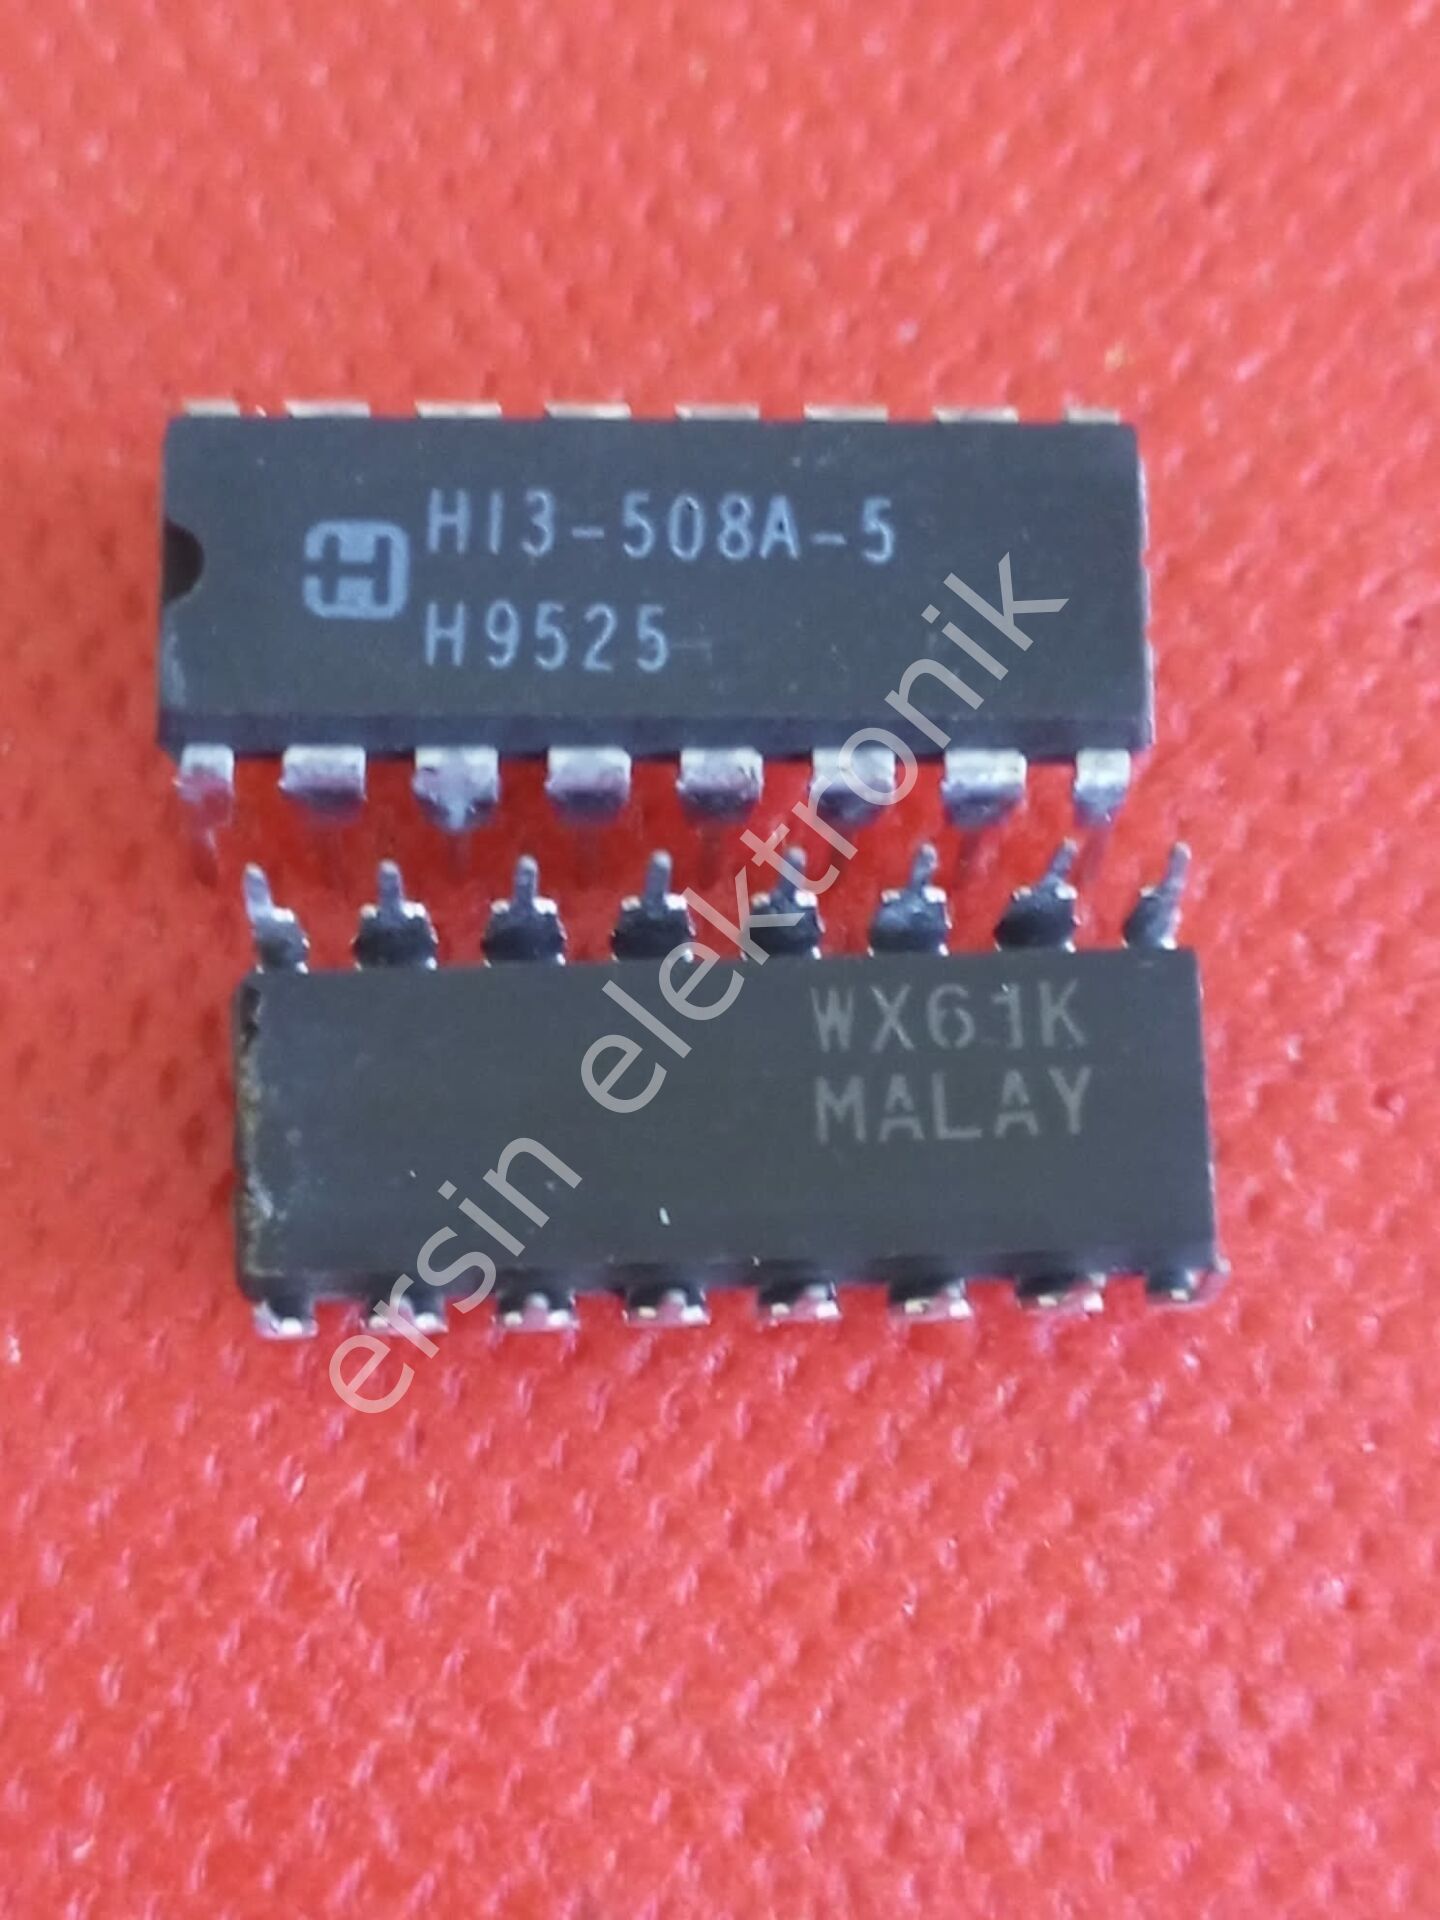 HI3-508A-5 Analog Multiplexer, Single, 8 Channel